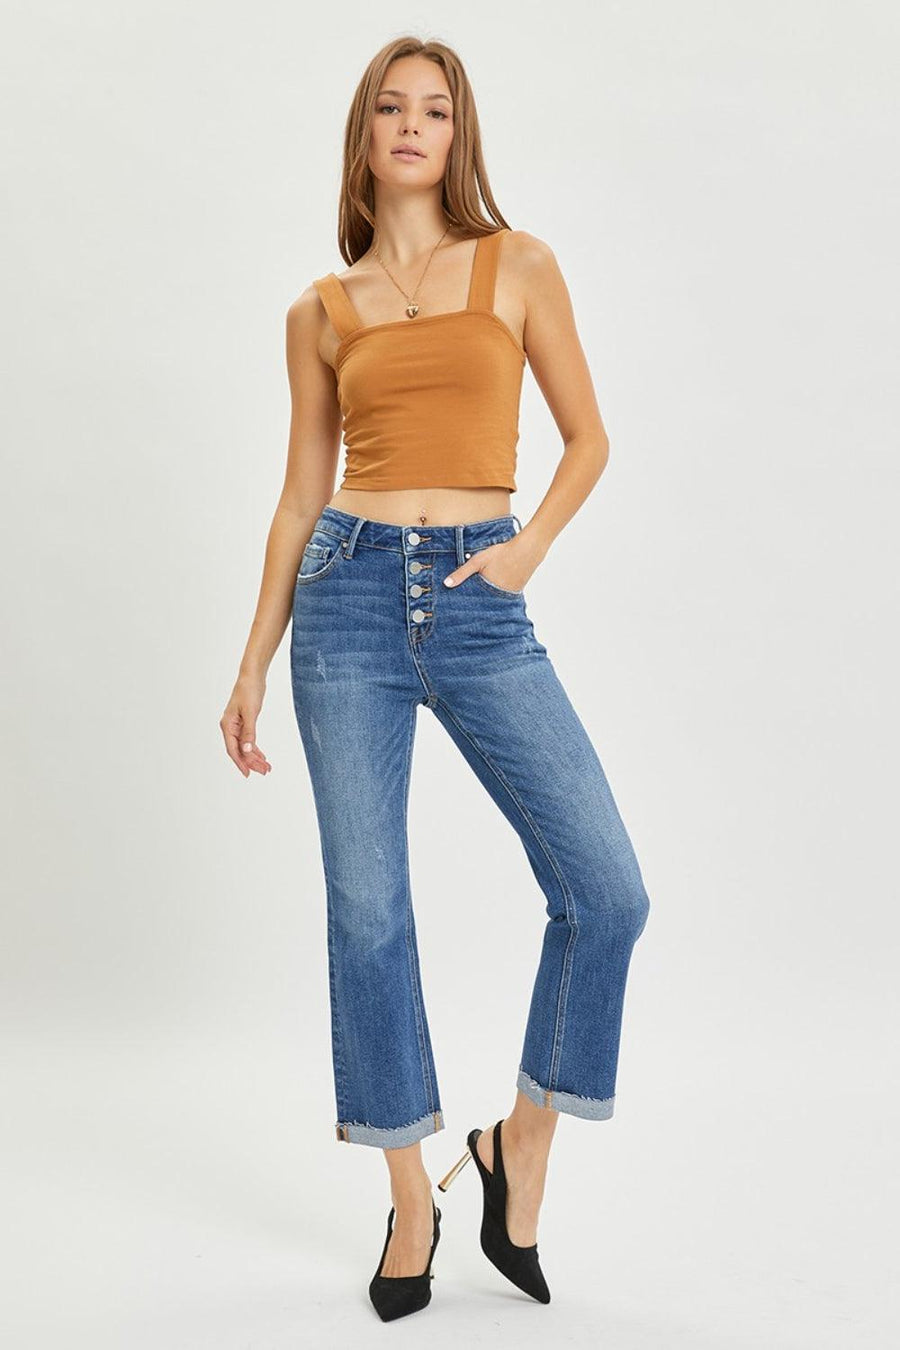 RISEN Button Fly Cropped Bootcut Jeans - Jessiz Boutique